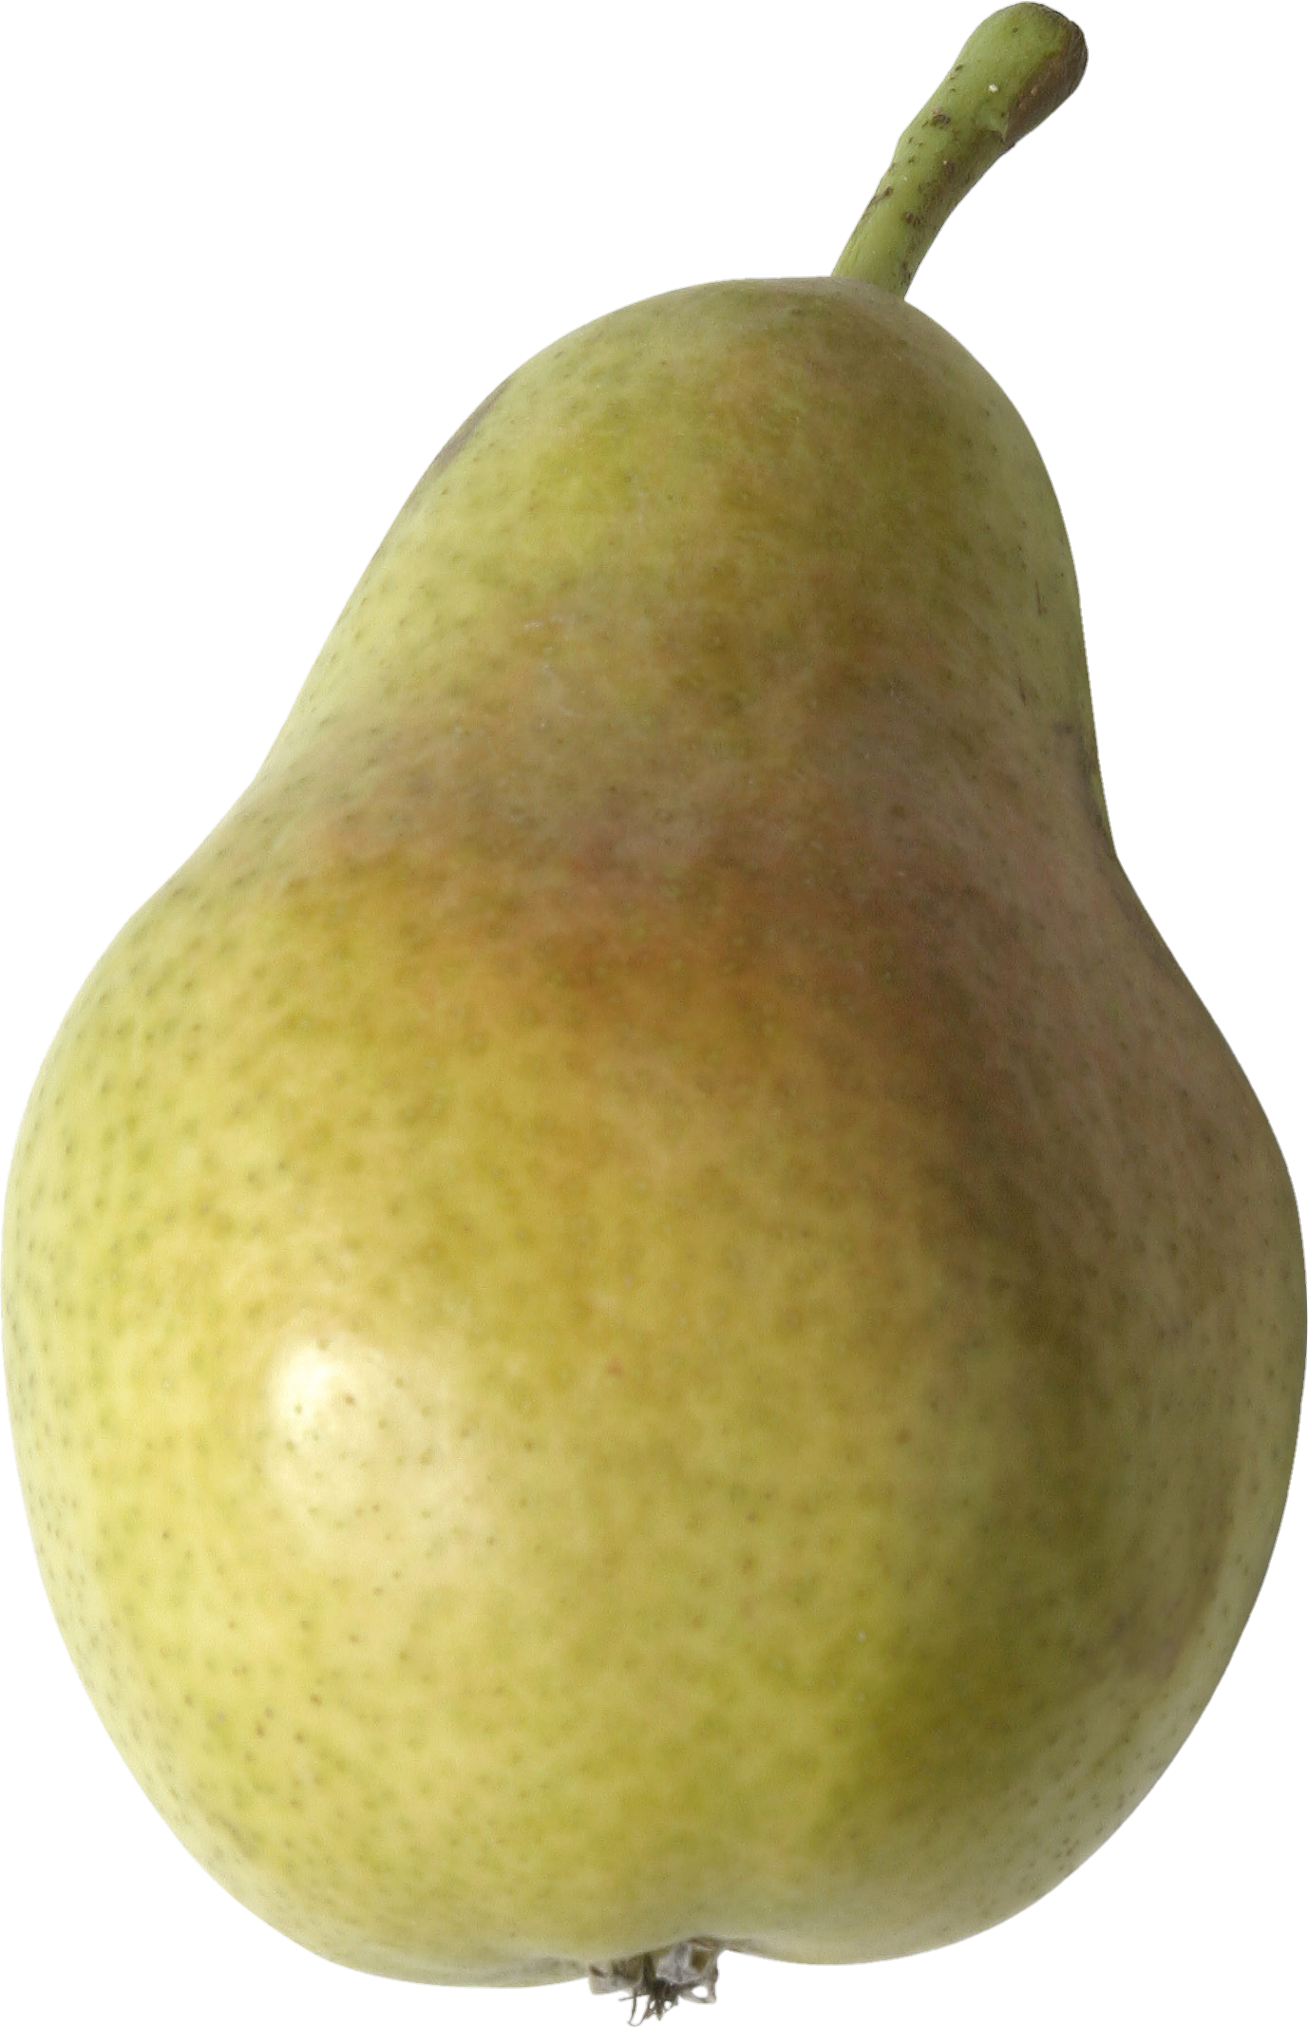 pear-1-1